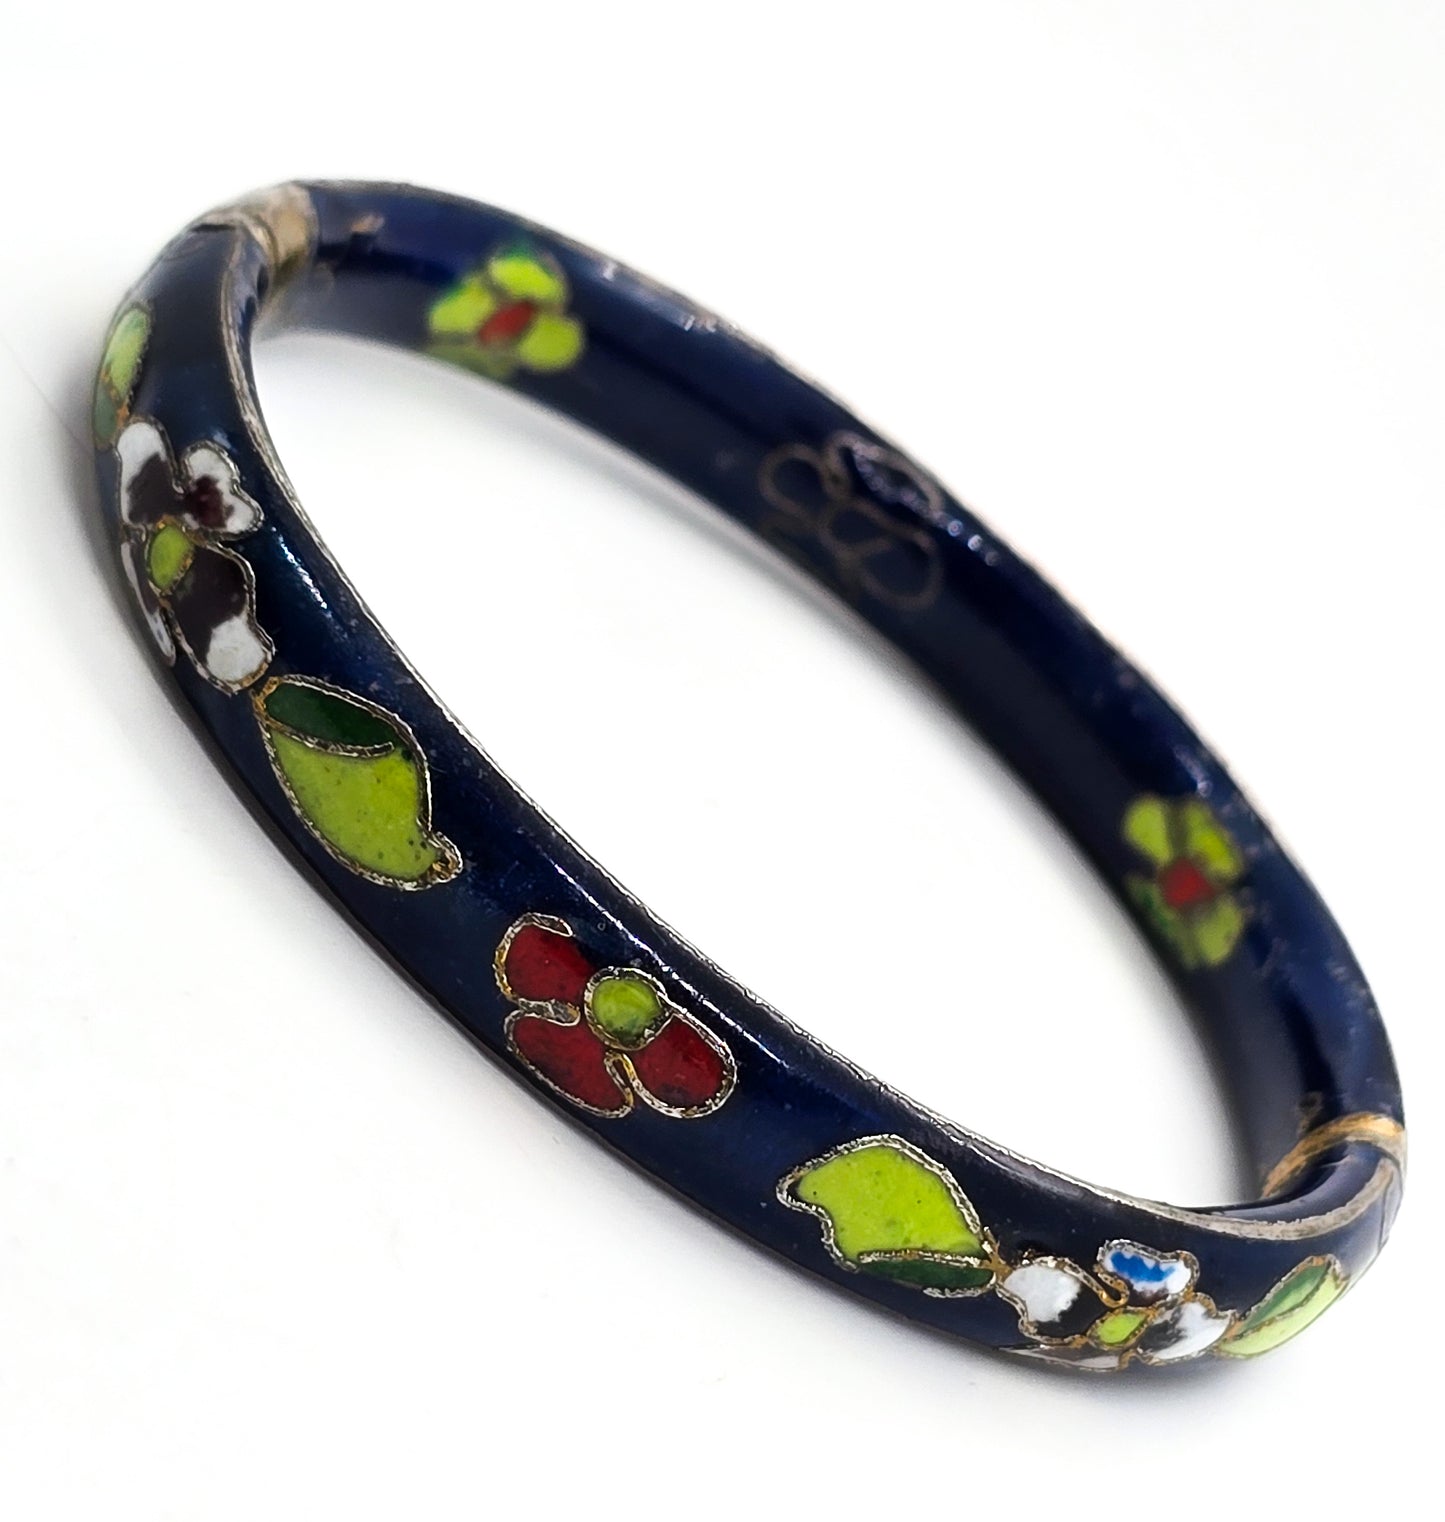 Blue Cloisonne enamel red and white flower vintage hinged bangle bracelet